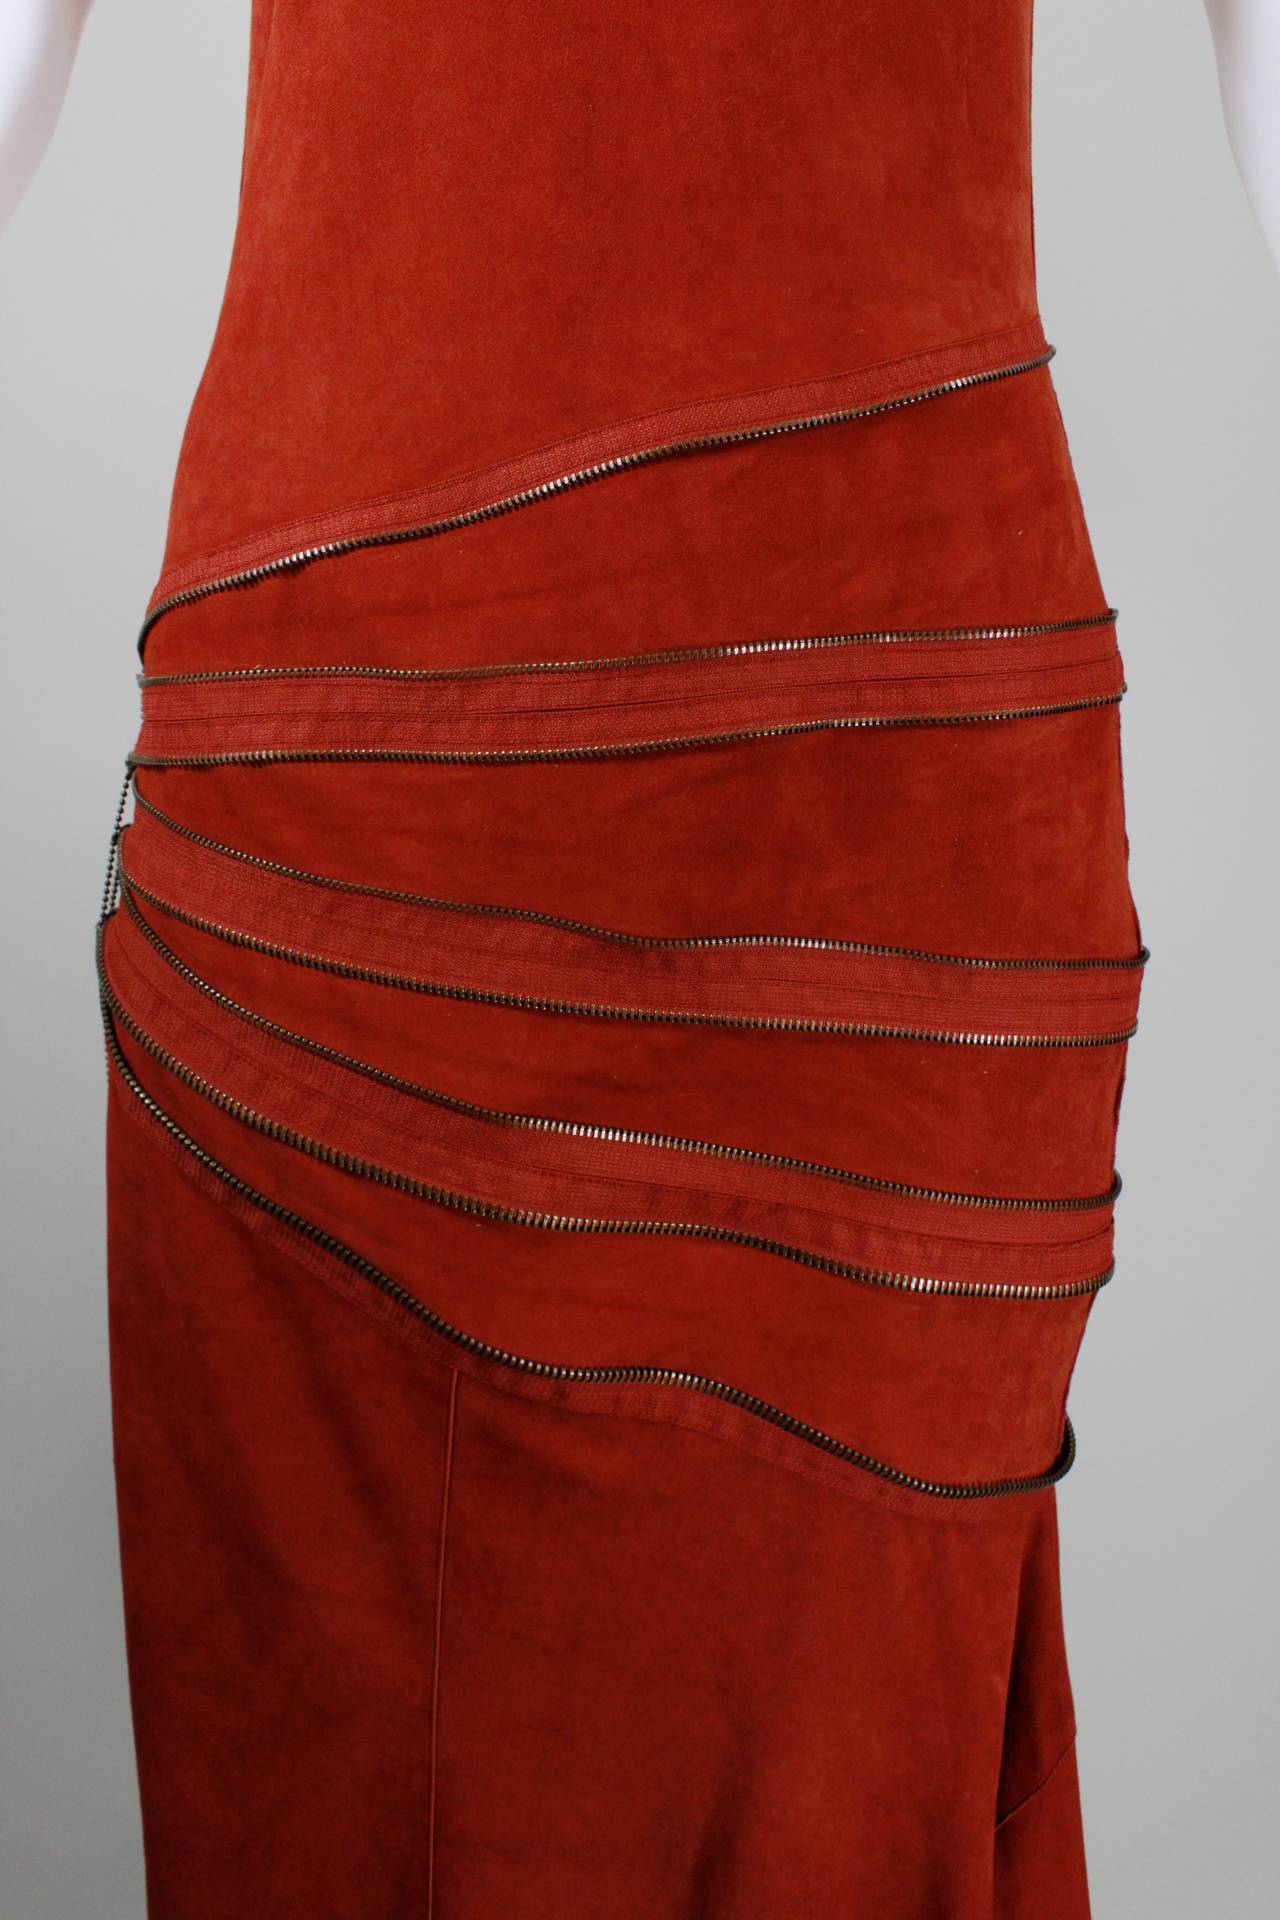 Gaultier Burnt Rust Suede Asymmetrical Zipper Dress For Sale 1